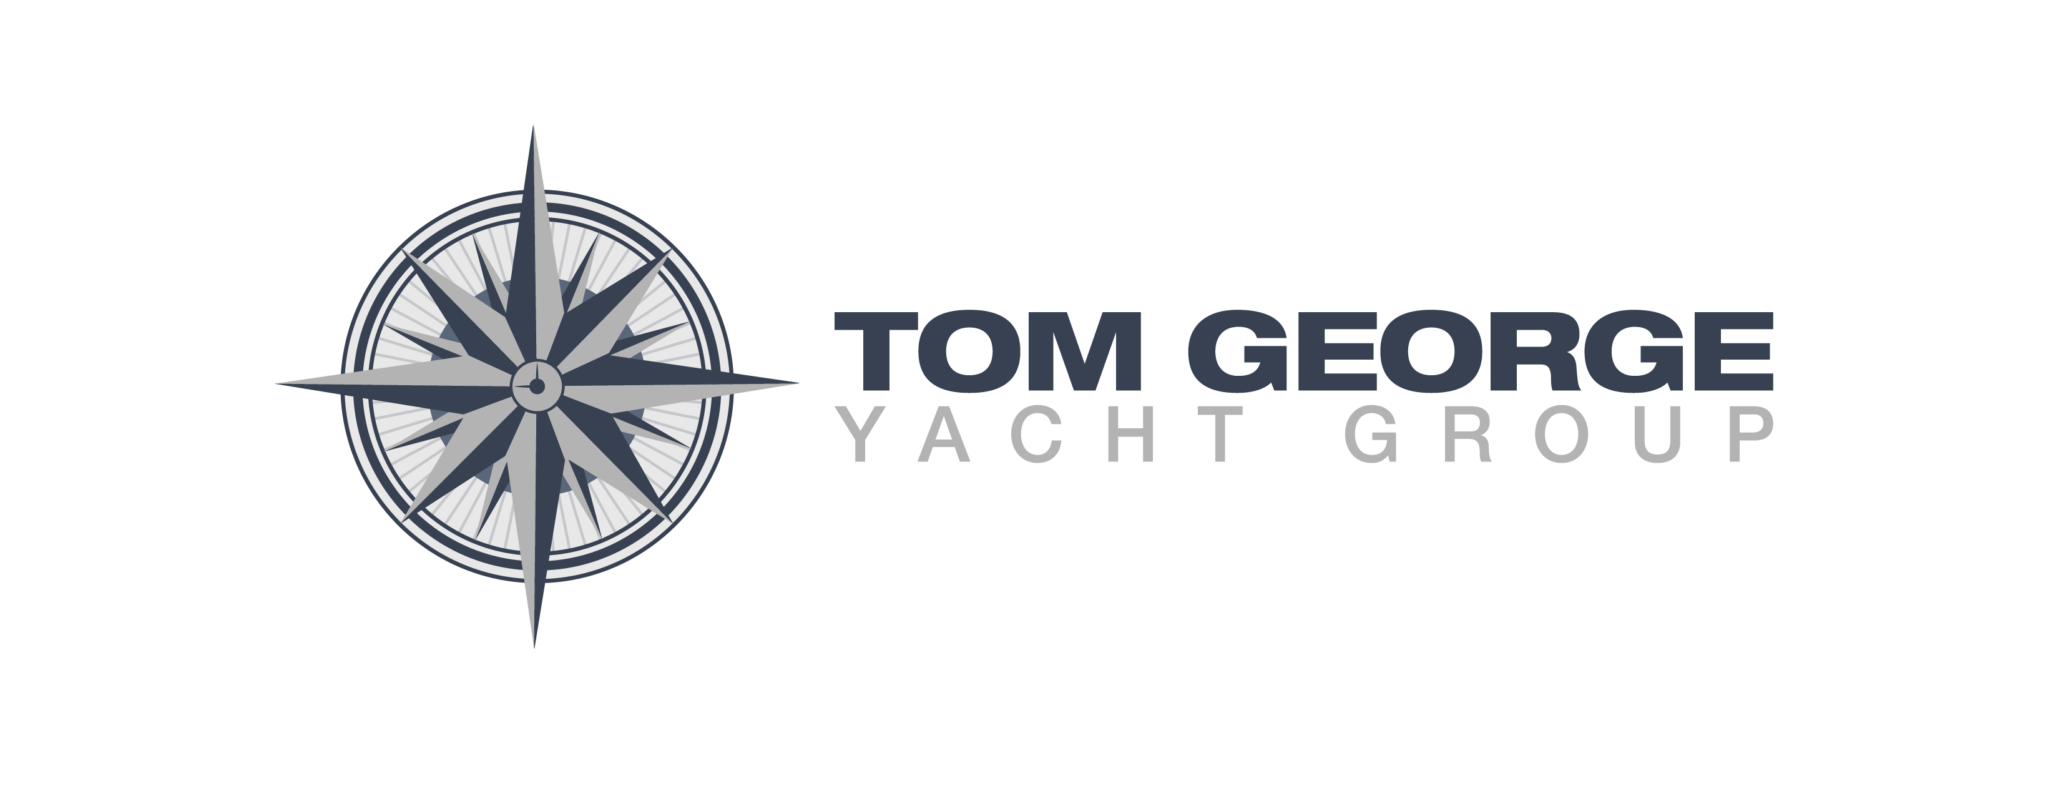 tom george yacht group